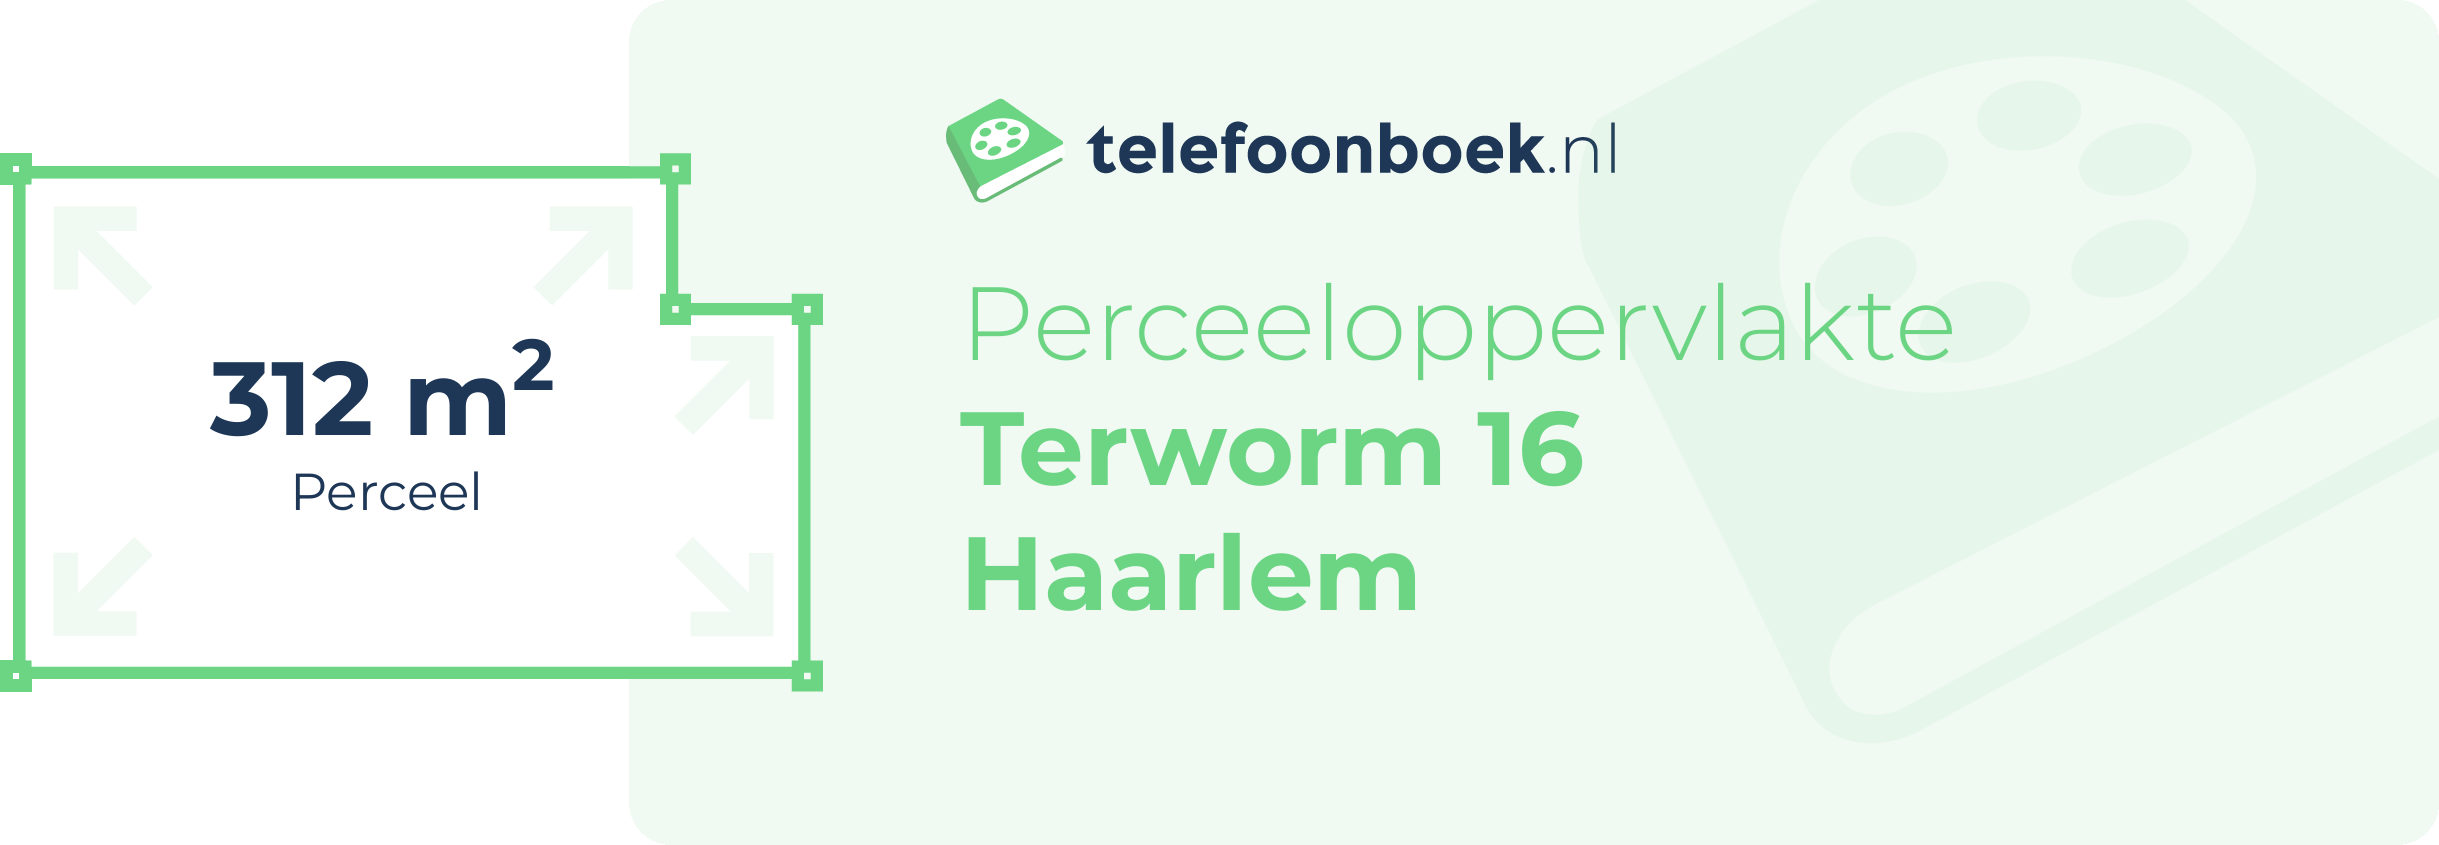 Perceeloppervlakte Terworm 16 Haarlem